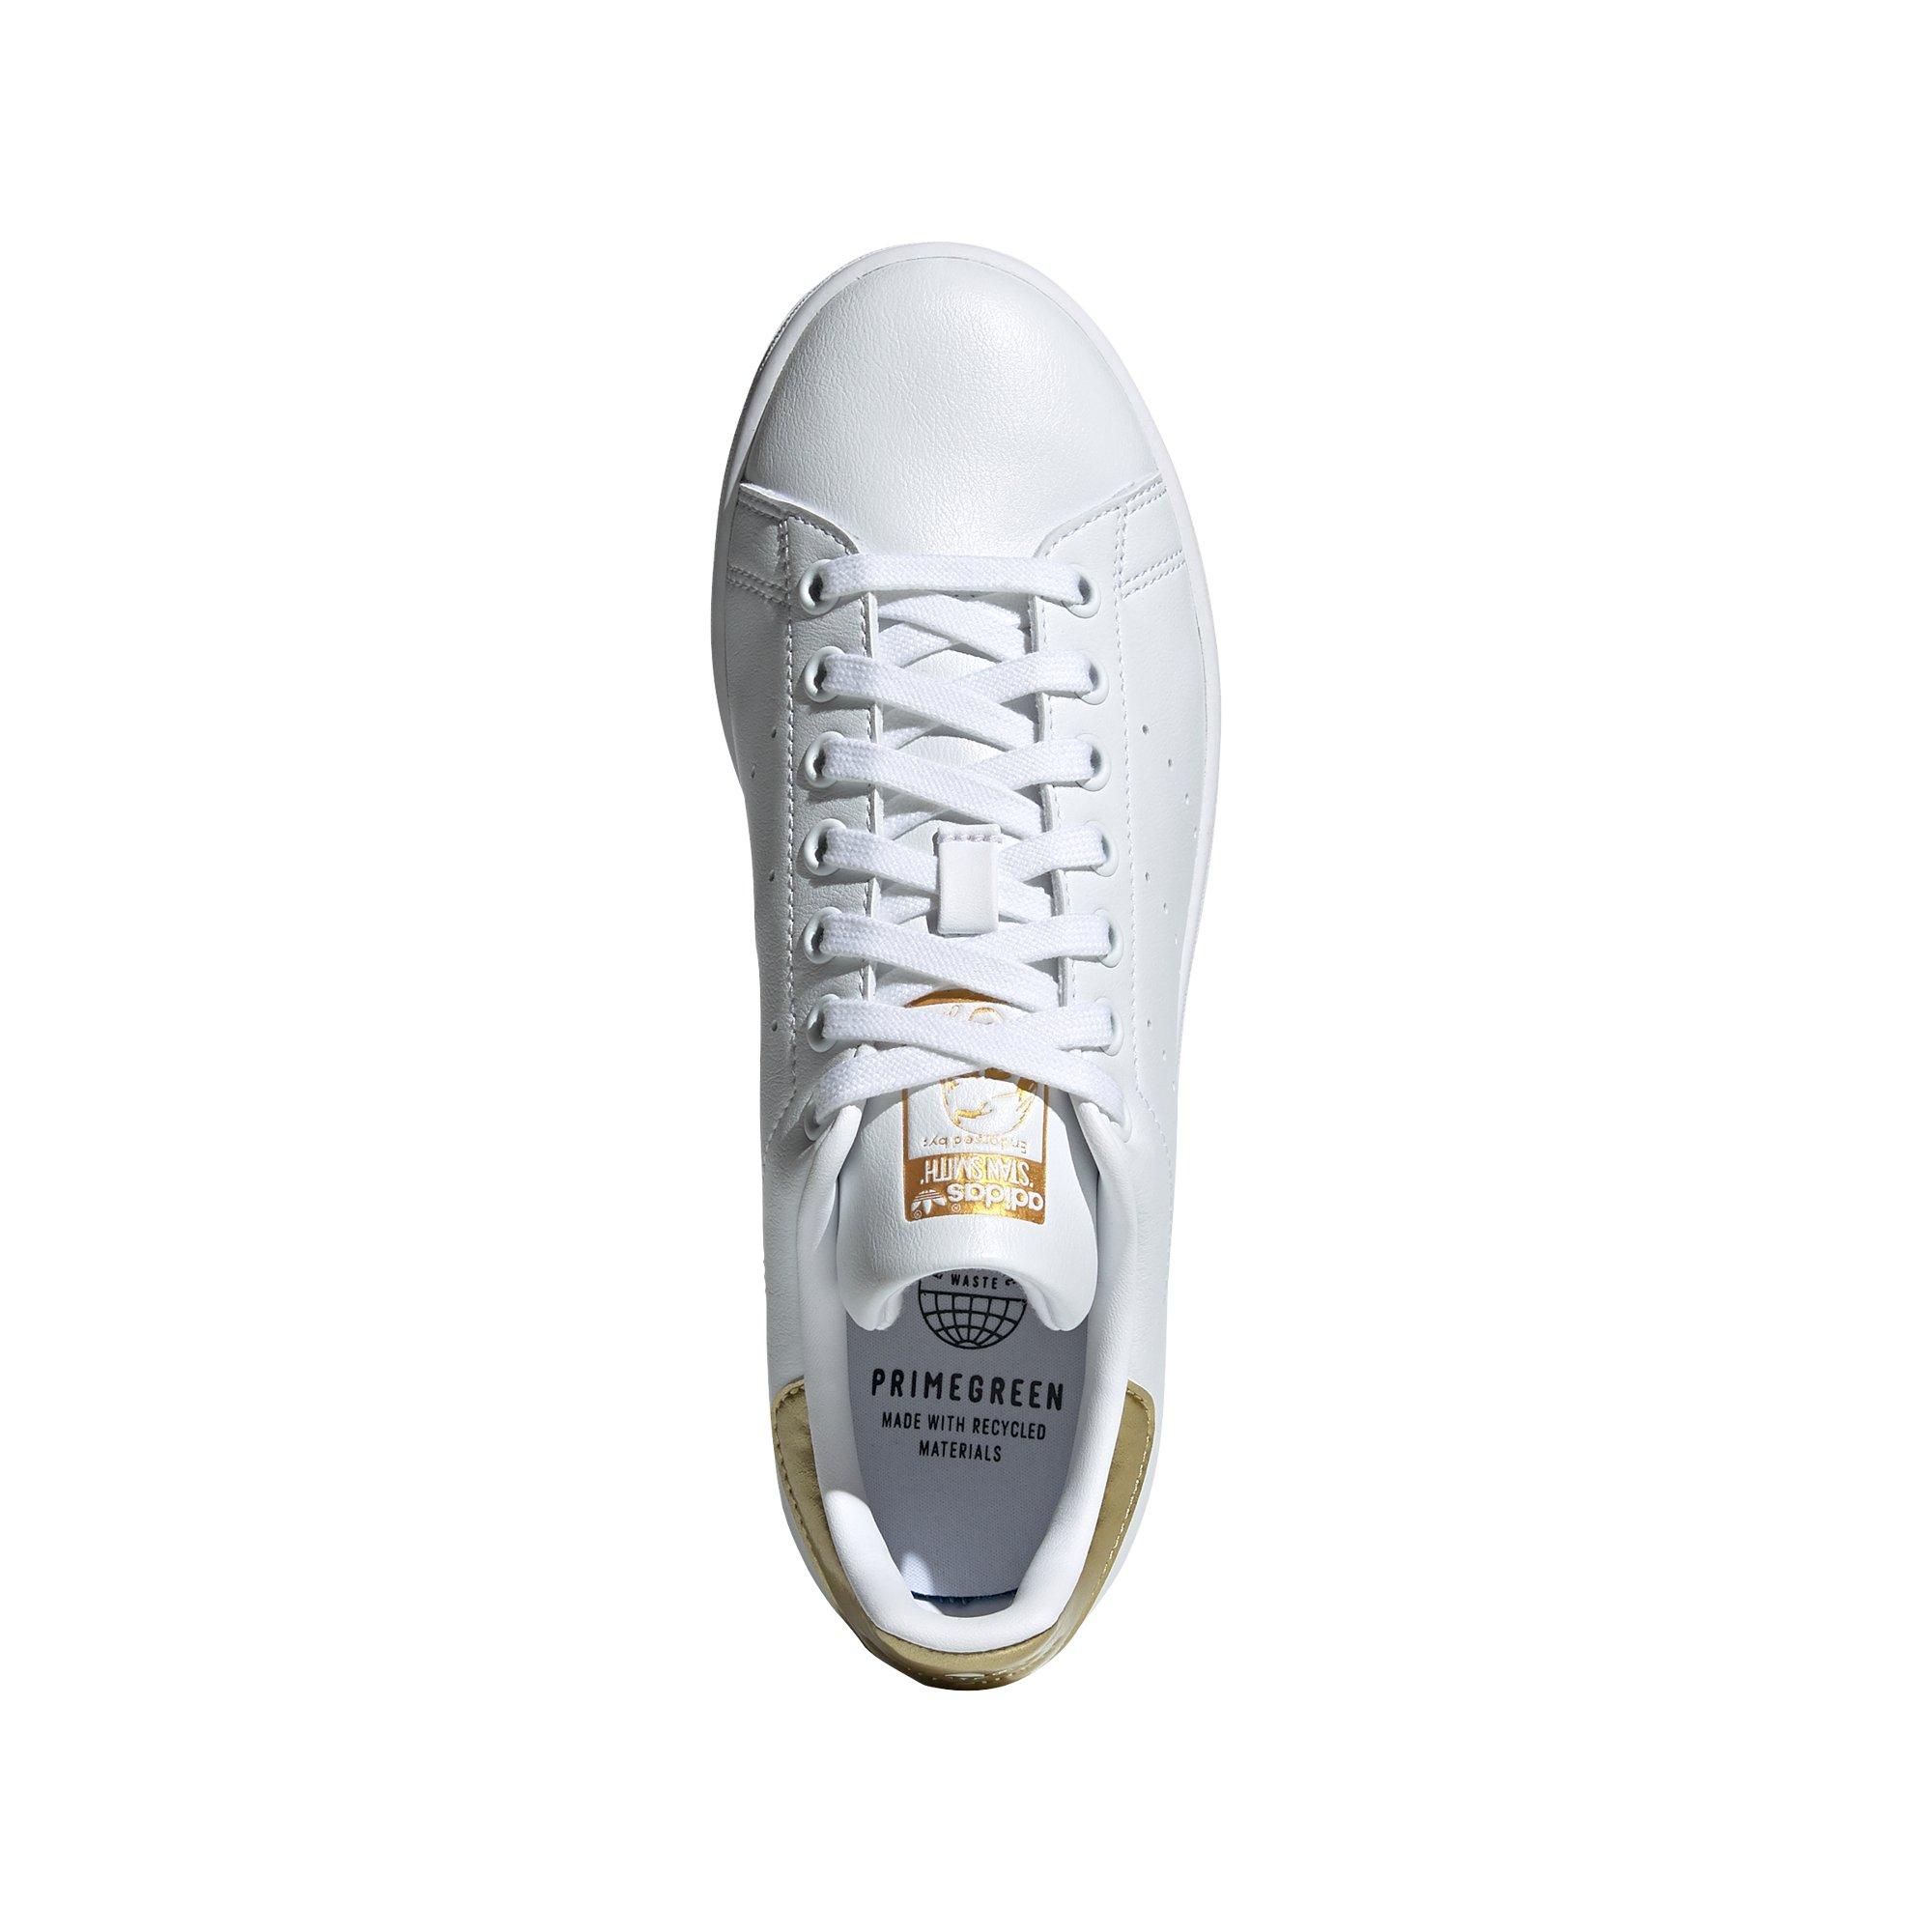 Adidas Originals Stan Smith White/Gold Women's Shoes, Size: 9